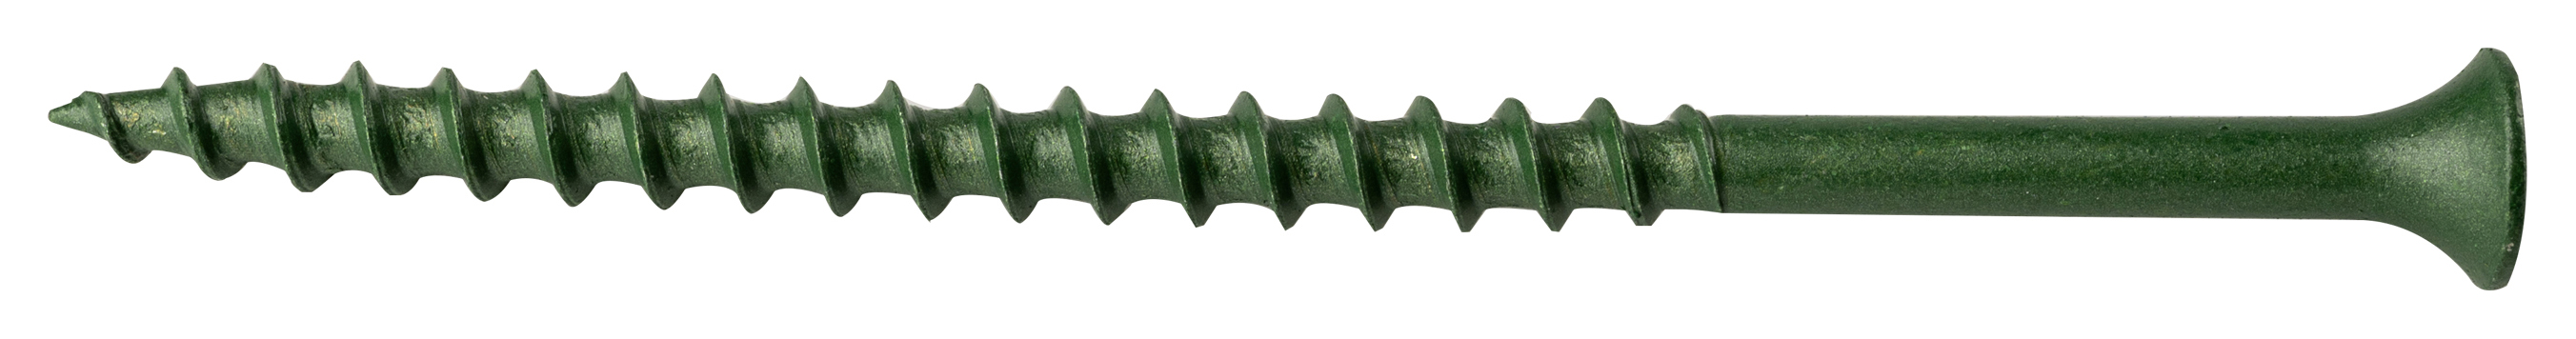 Wickes Exterior Grade Green Screws - 5 x 75mm - Pack of 500